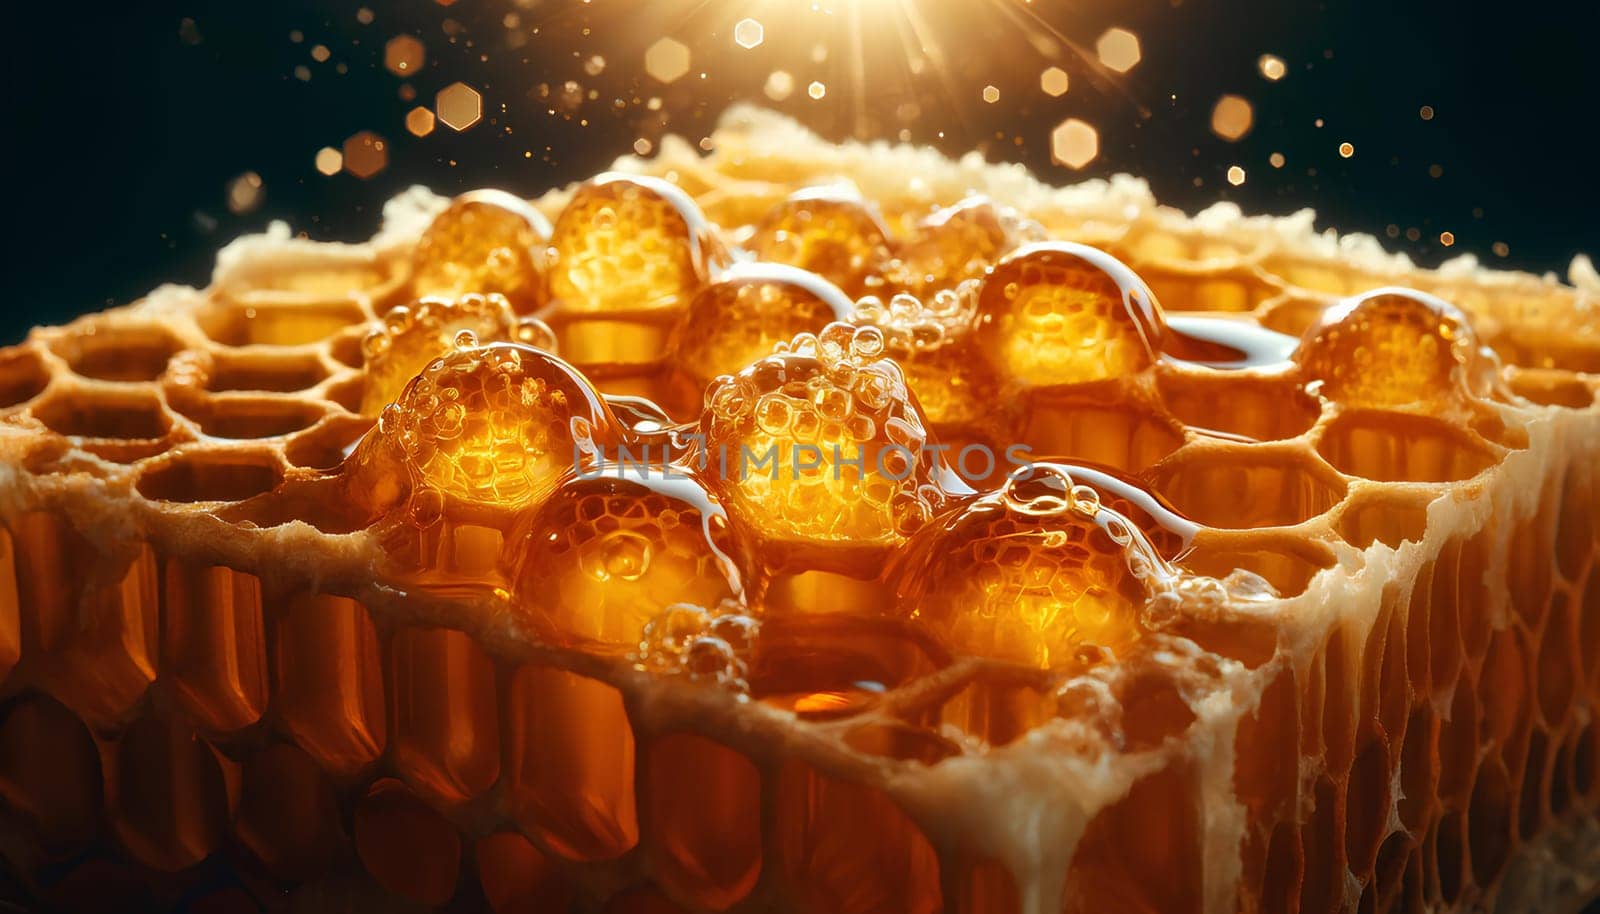 A piece of golden comb honey in sunlight close up by Annado